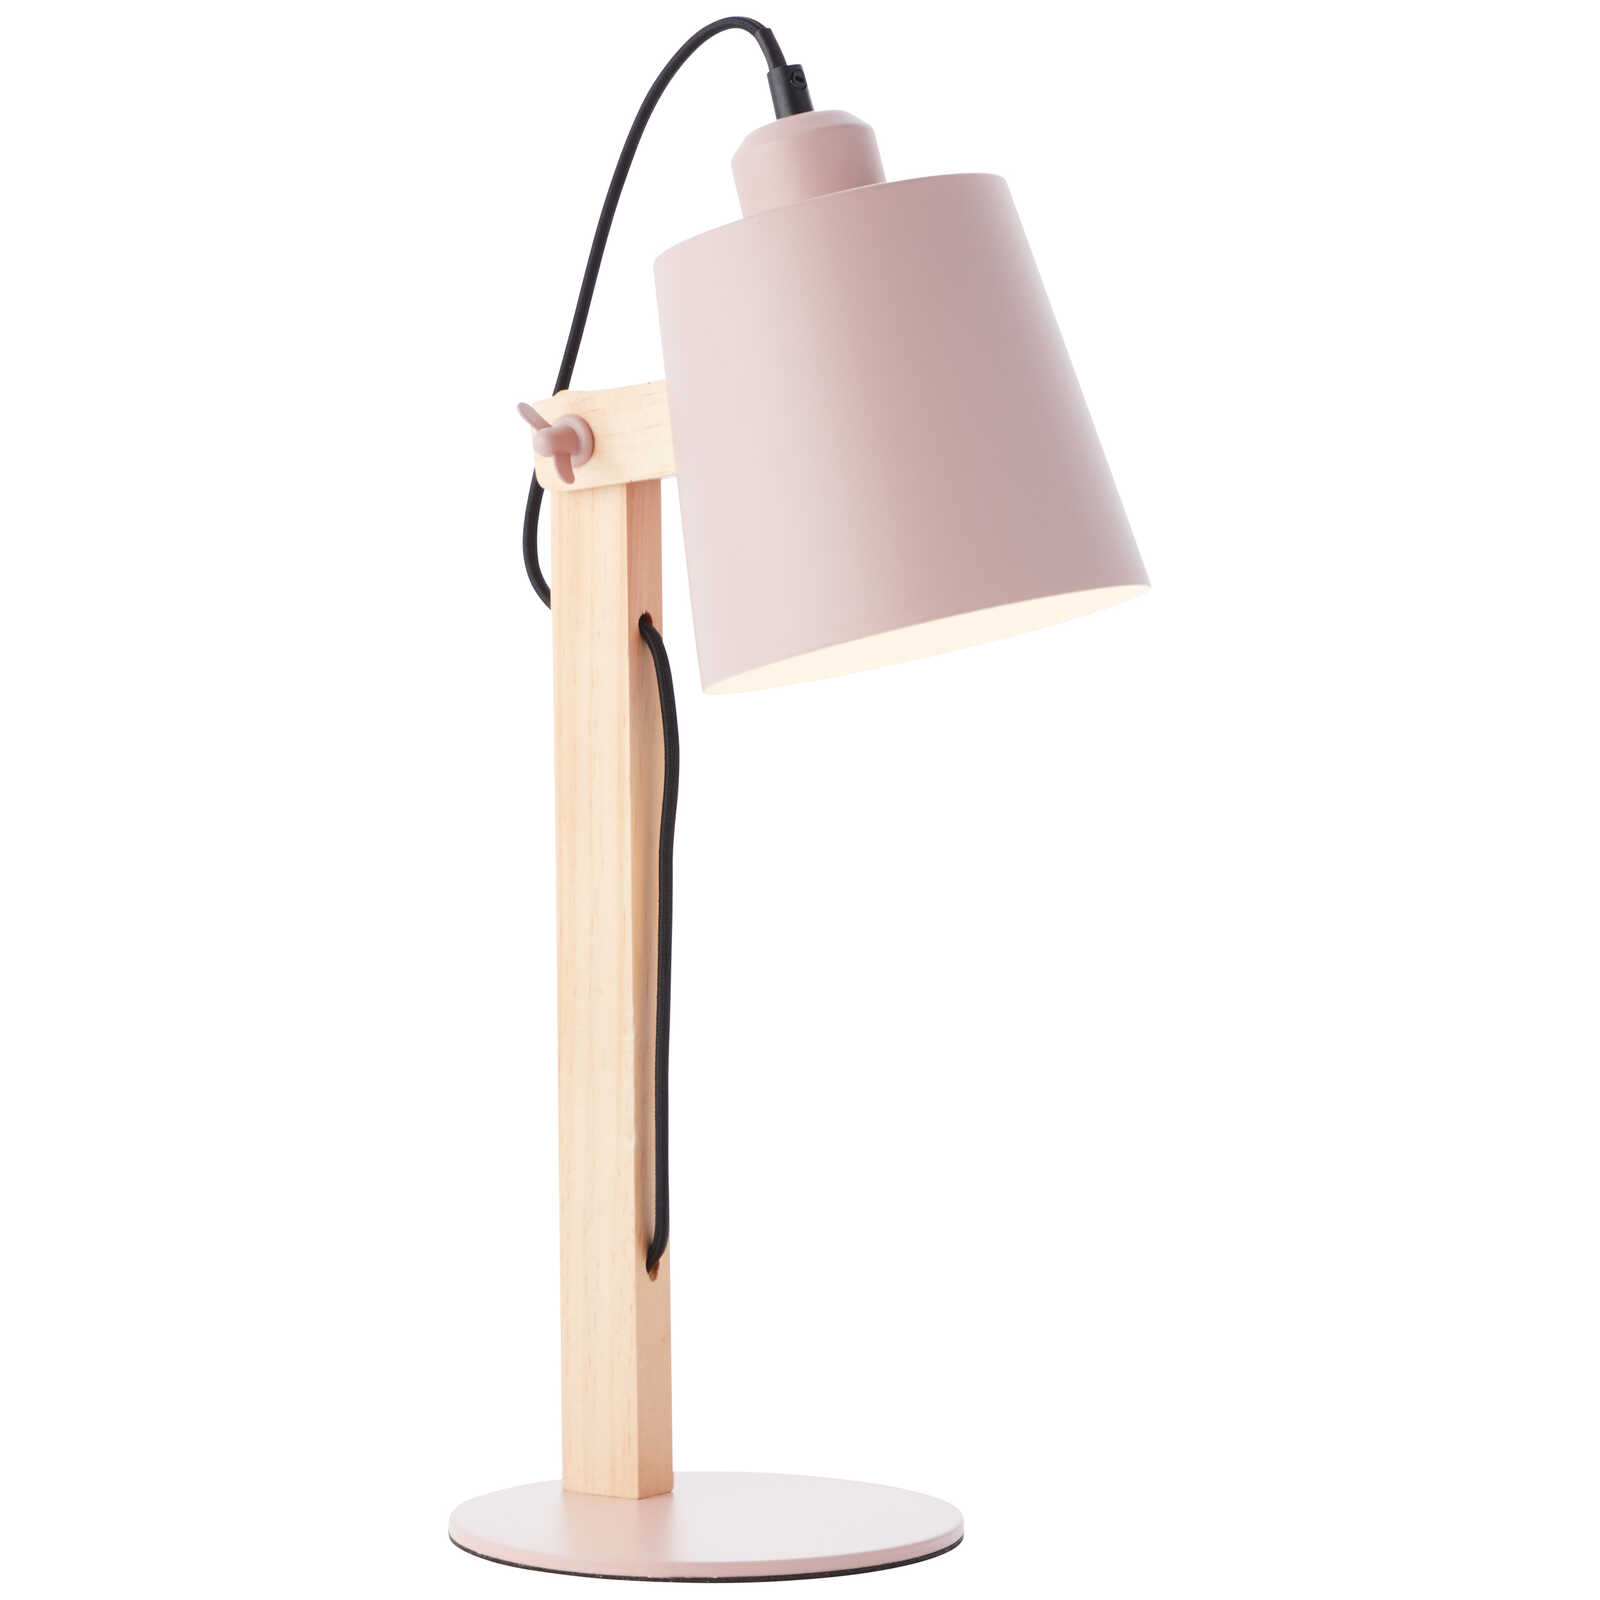             Lámpara de mesa de madera - Paul 2 - Rosa
        